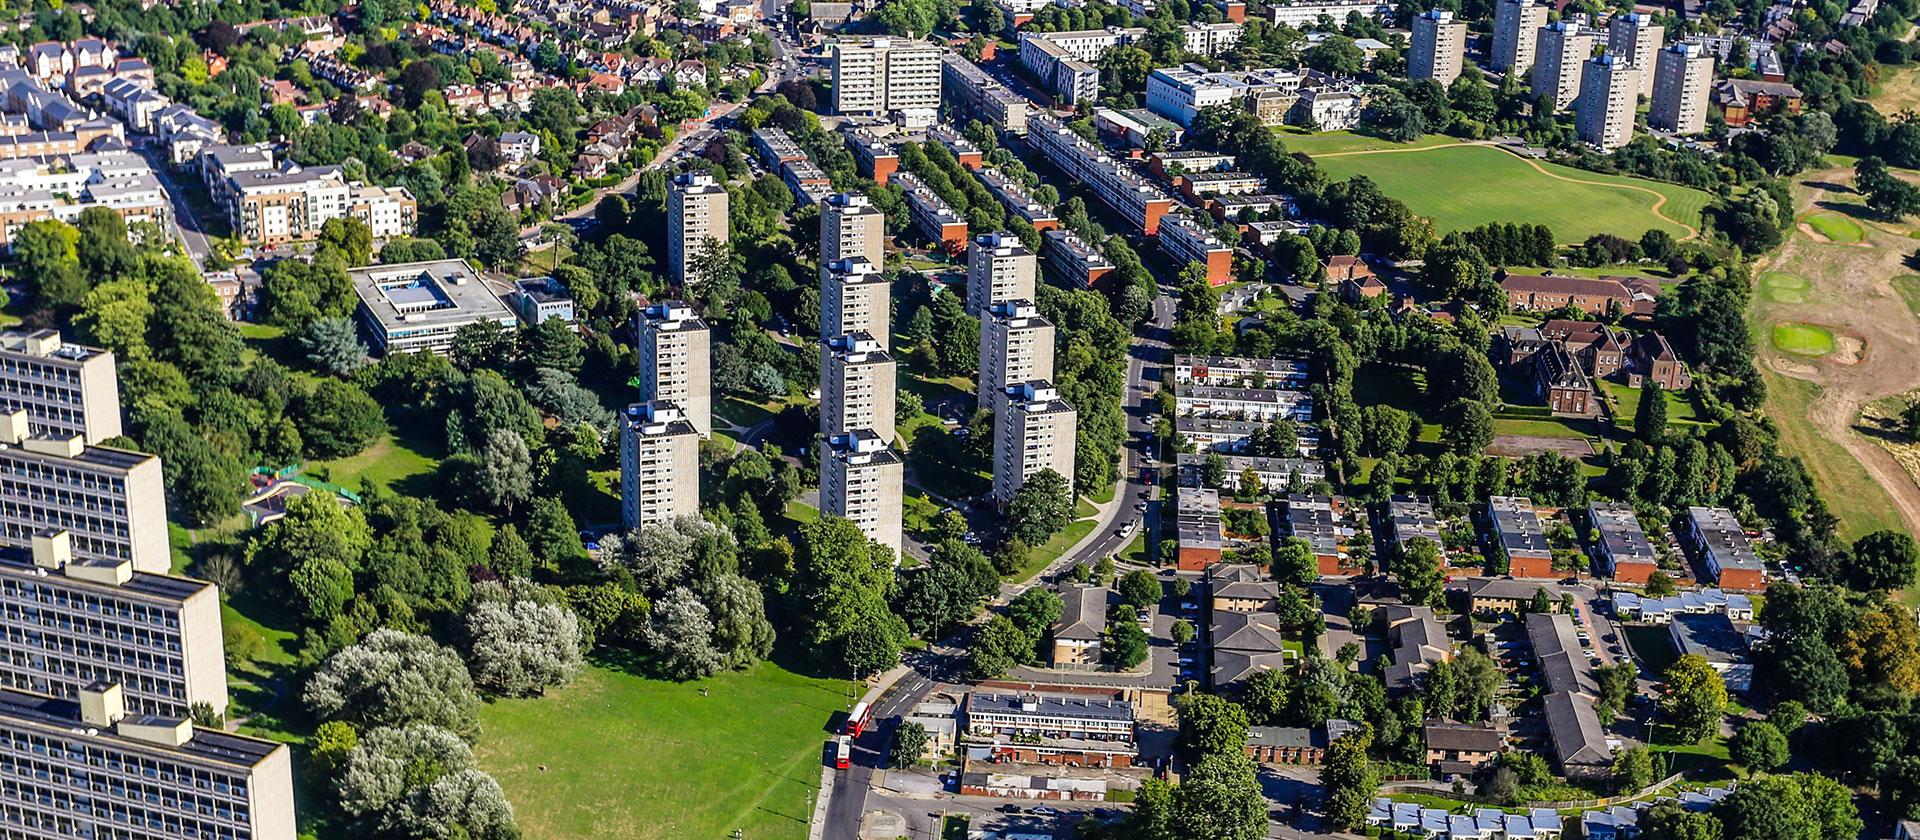 Aerial view of the Alton Estate